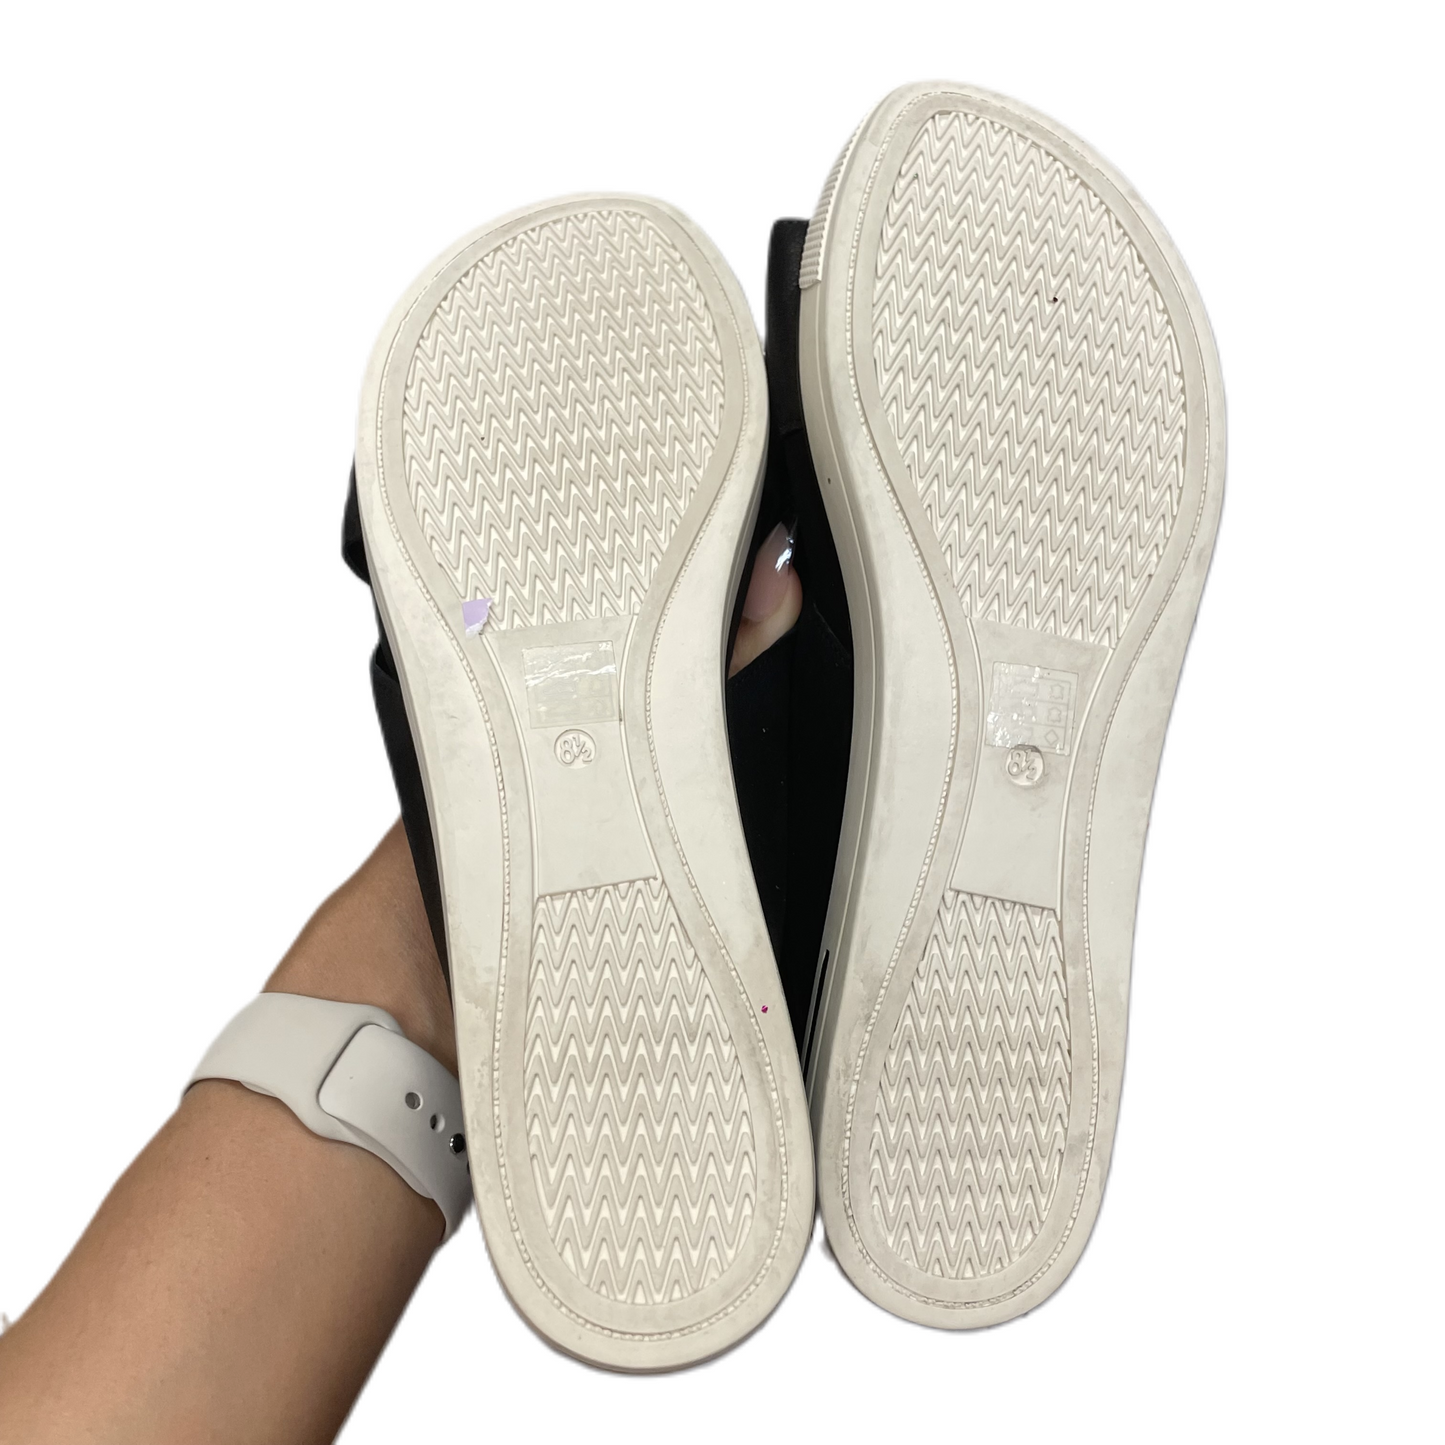 Black Sandals Heels Wedge By Eileen Fisher, Size: 8.5